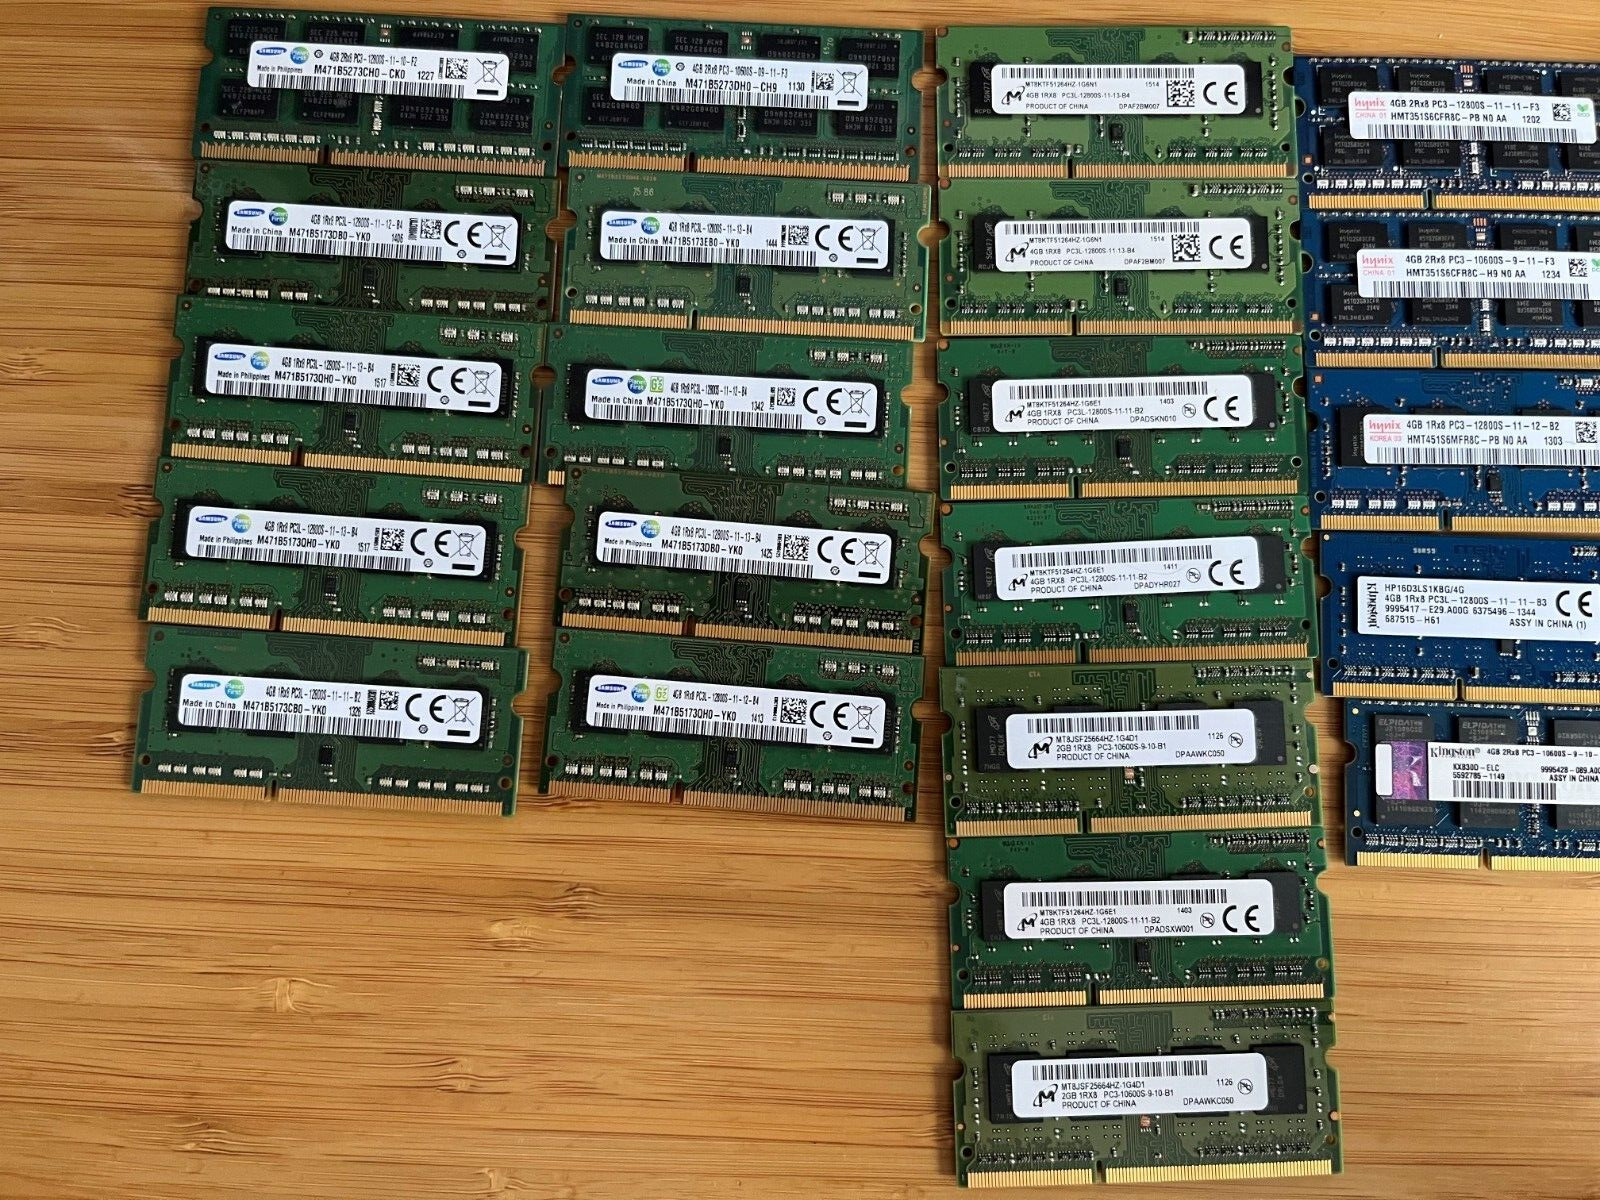 43 LOT - 29 4GB - 14 2GB SO-DIMM Laptop Memory RAM - MIXED BRANDS